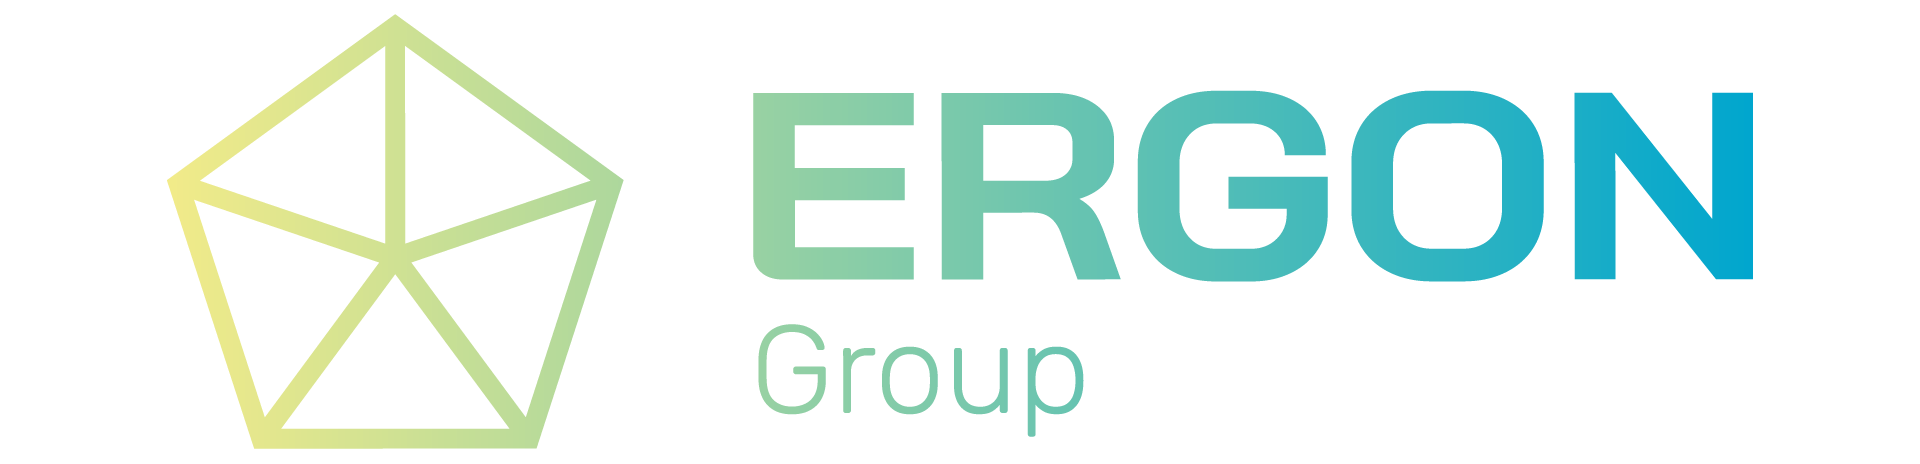 Ergon Group